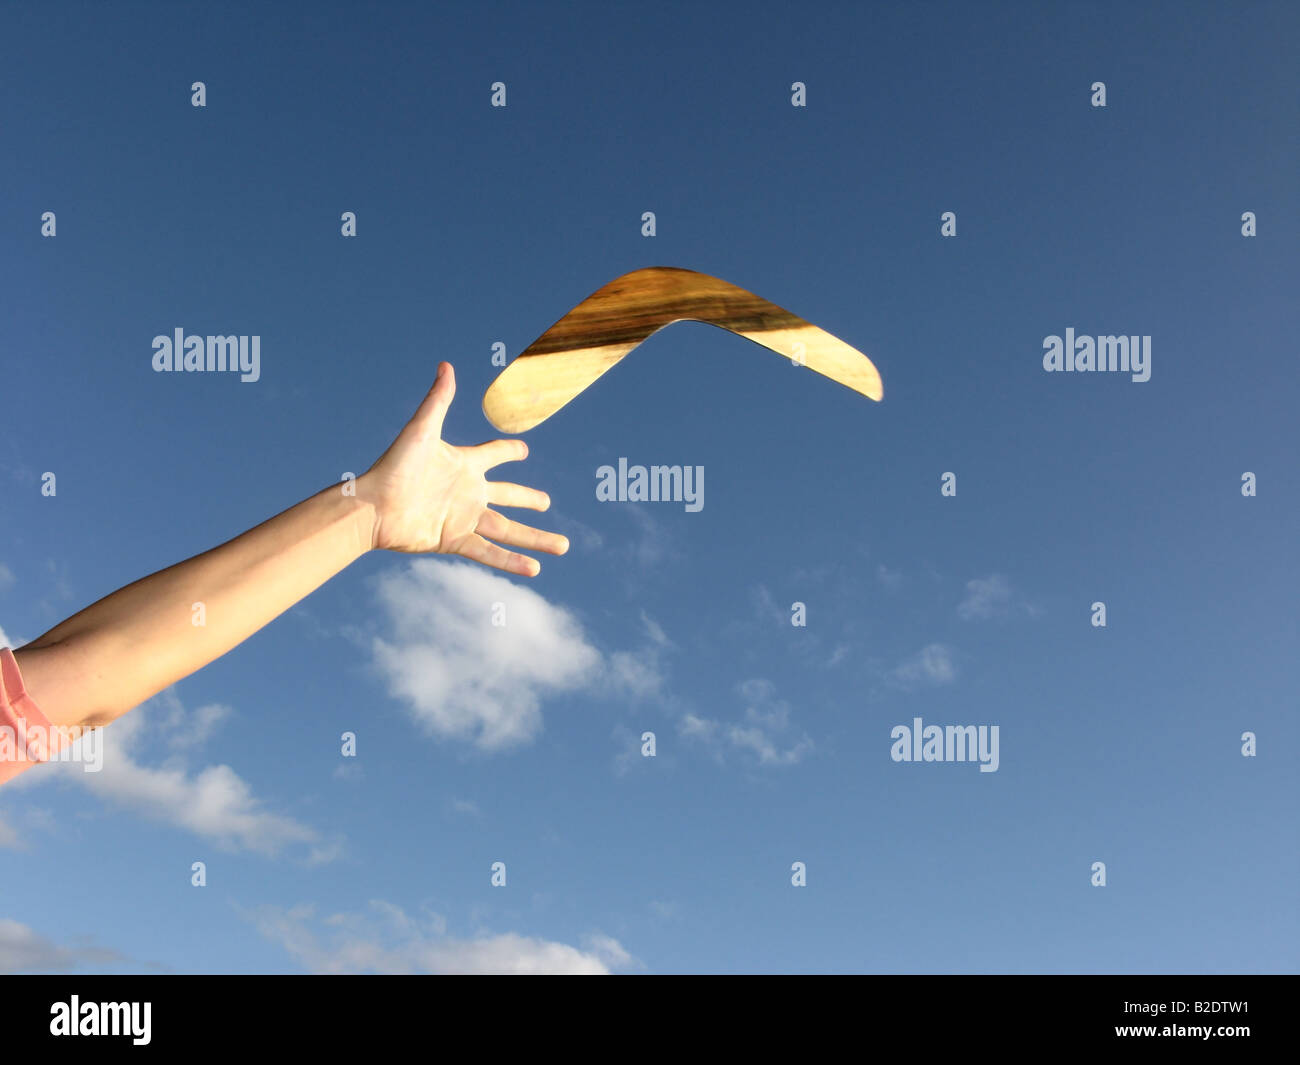 throwing a boomerang